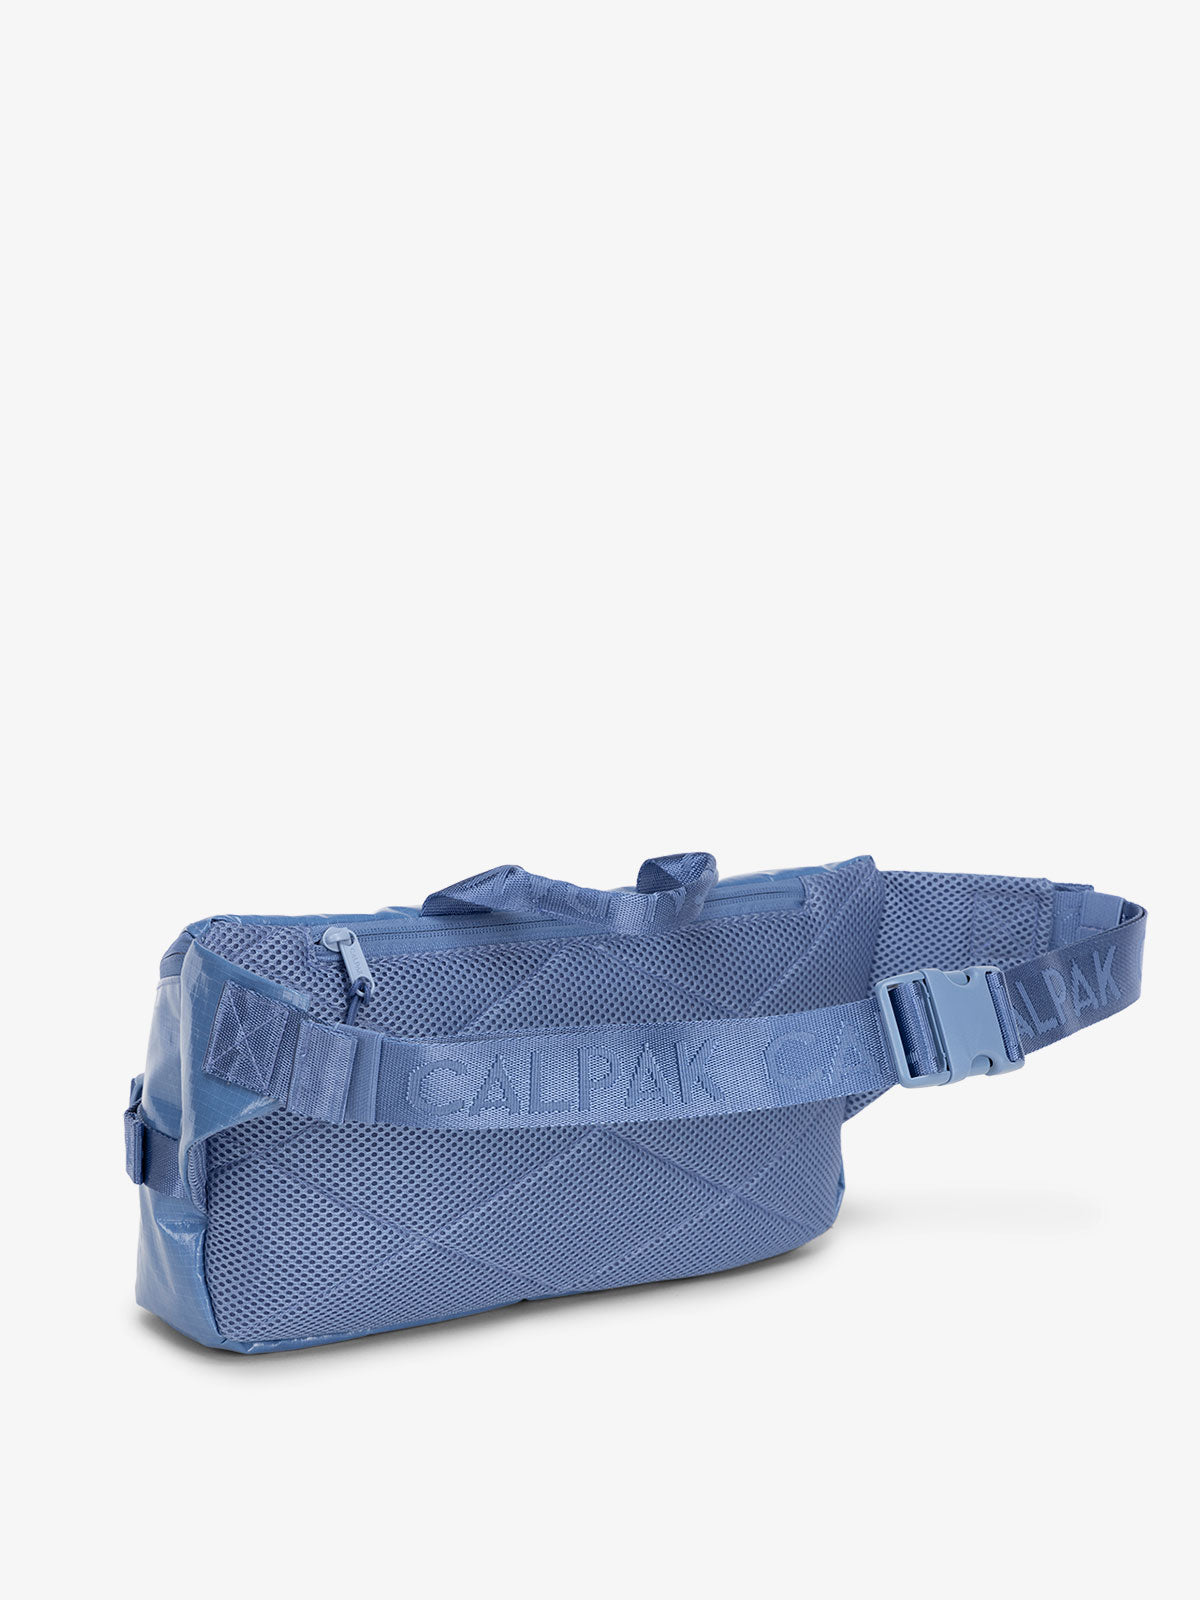 water resistant sling bag for travel